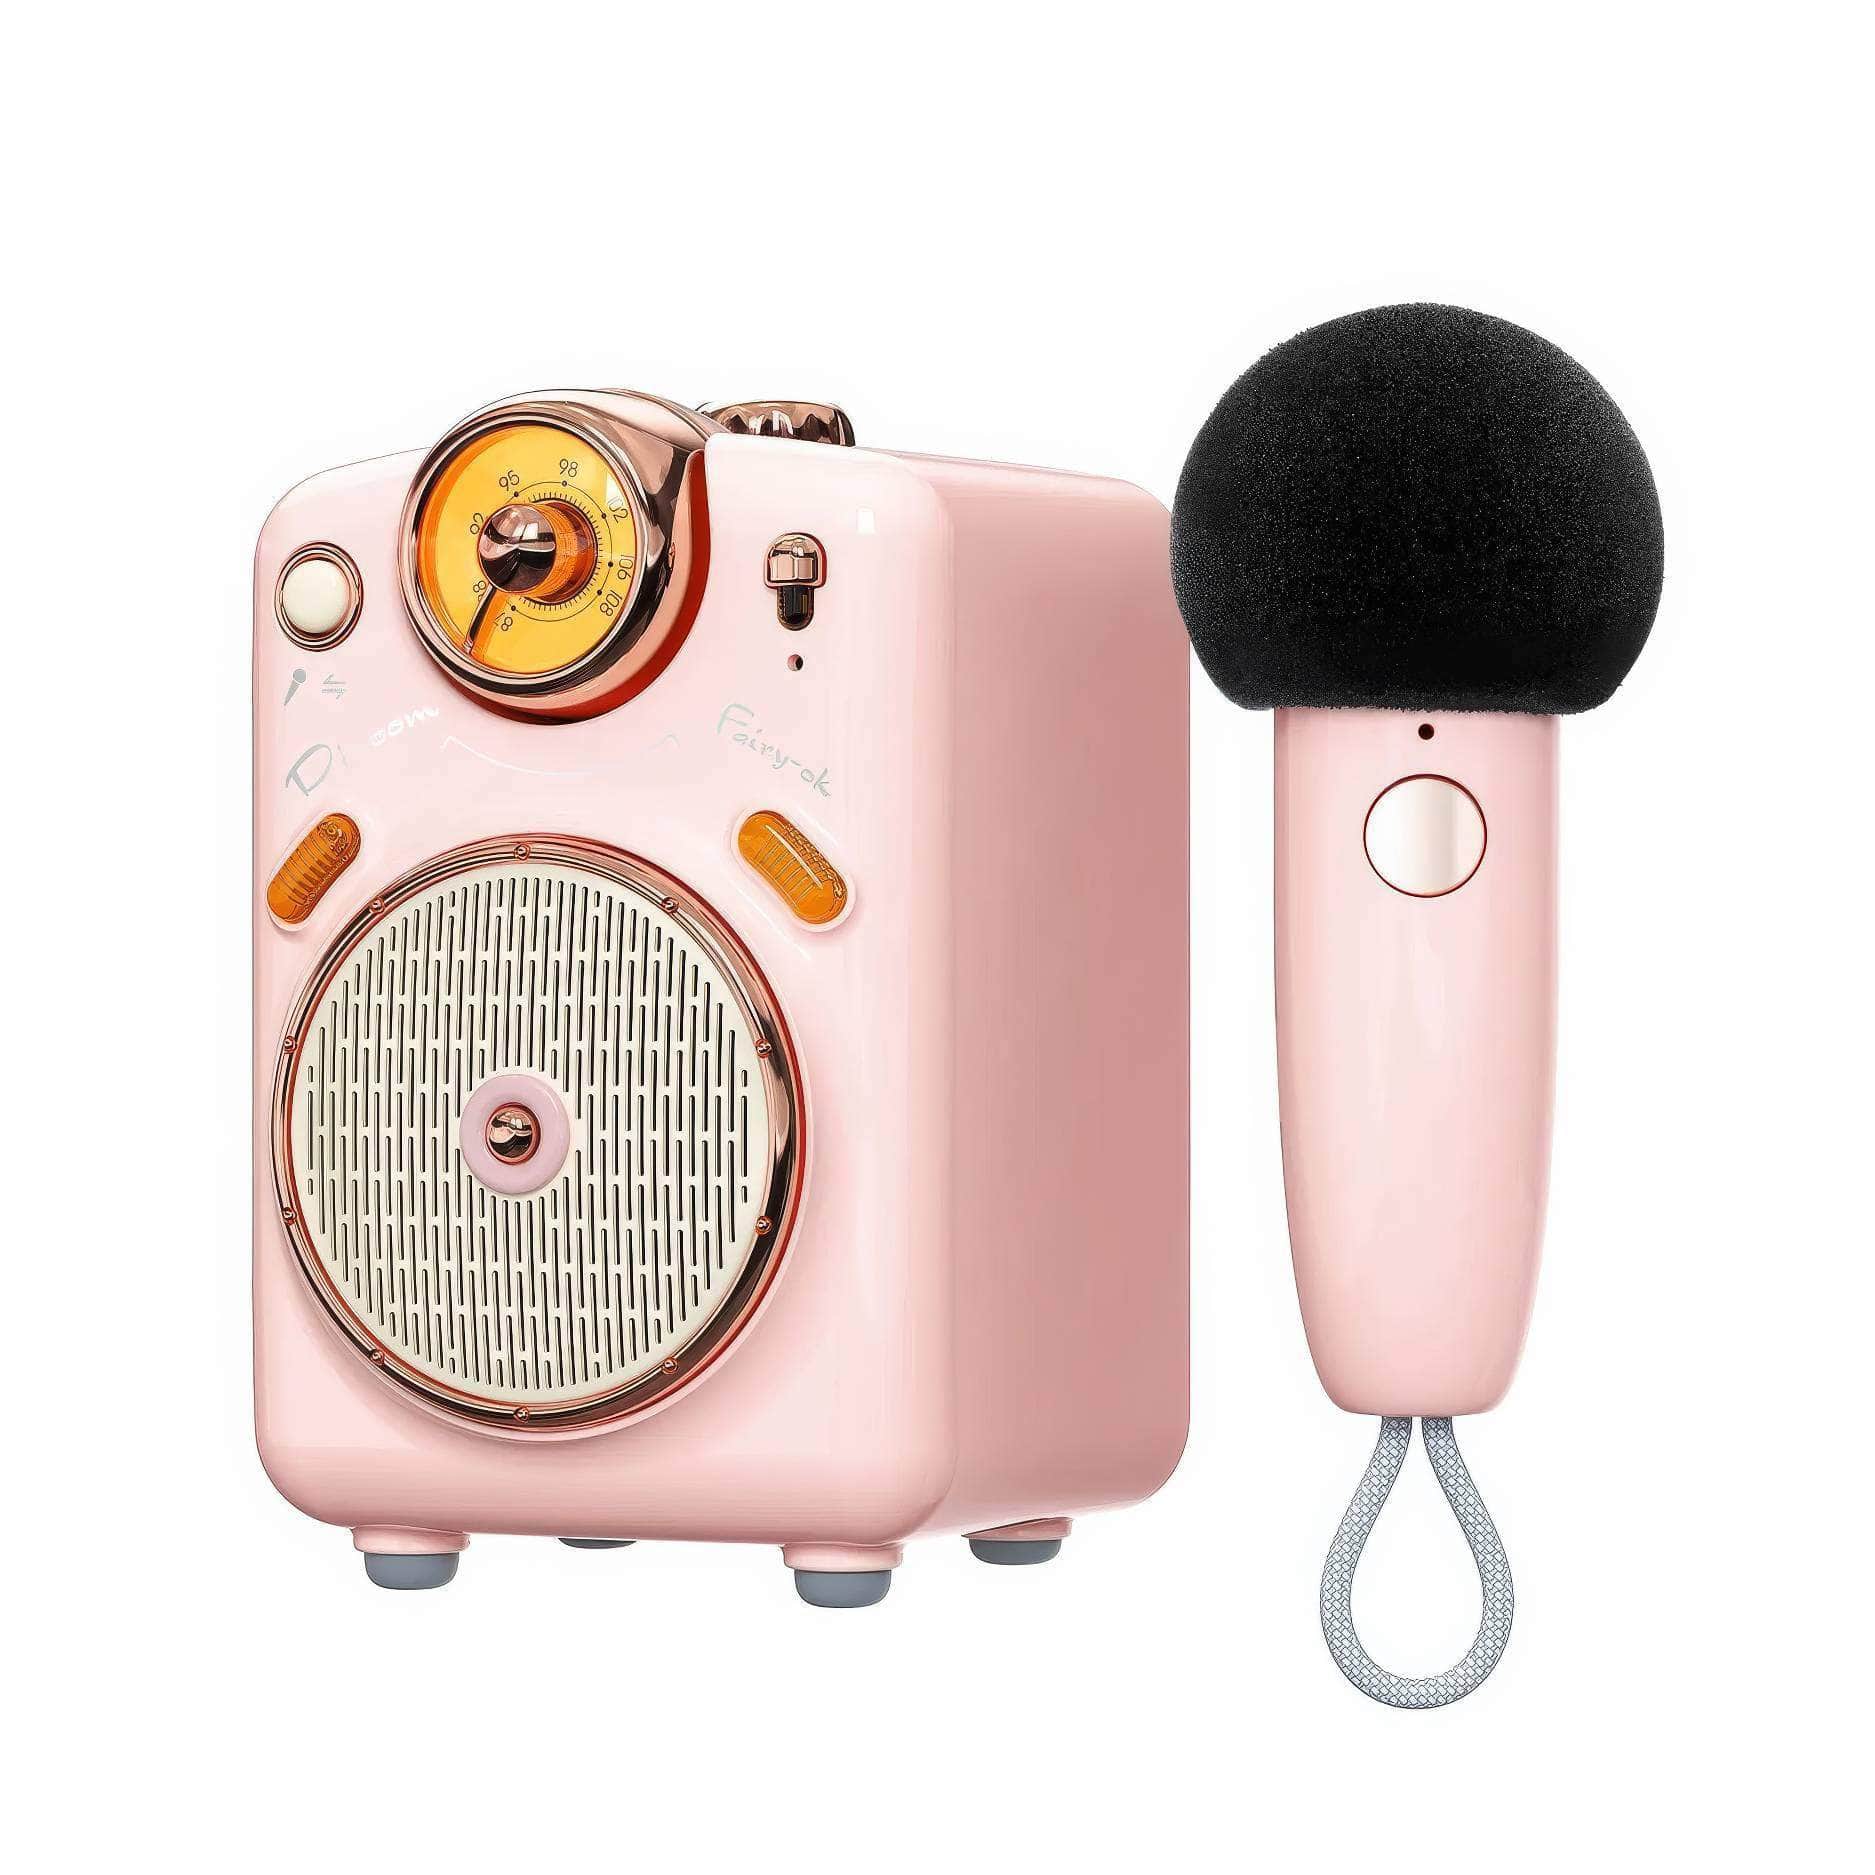 Divoom Fairy-OK Portable Bluetooth Speaker - Microphone Karaoke Function with Voice Change, FM Radio, TF Card Slot